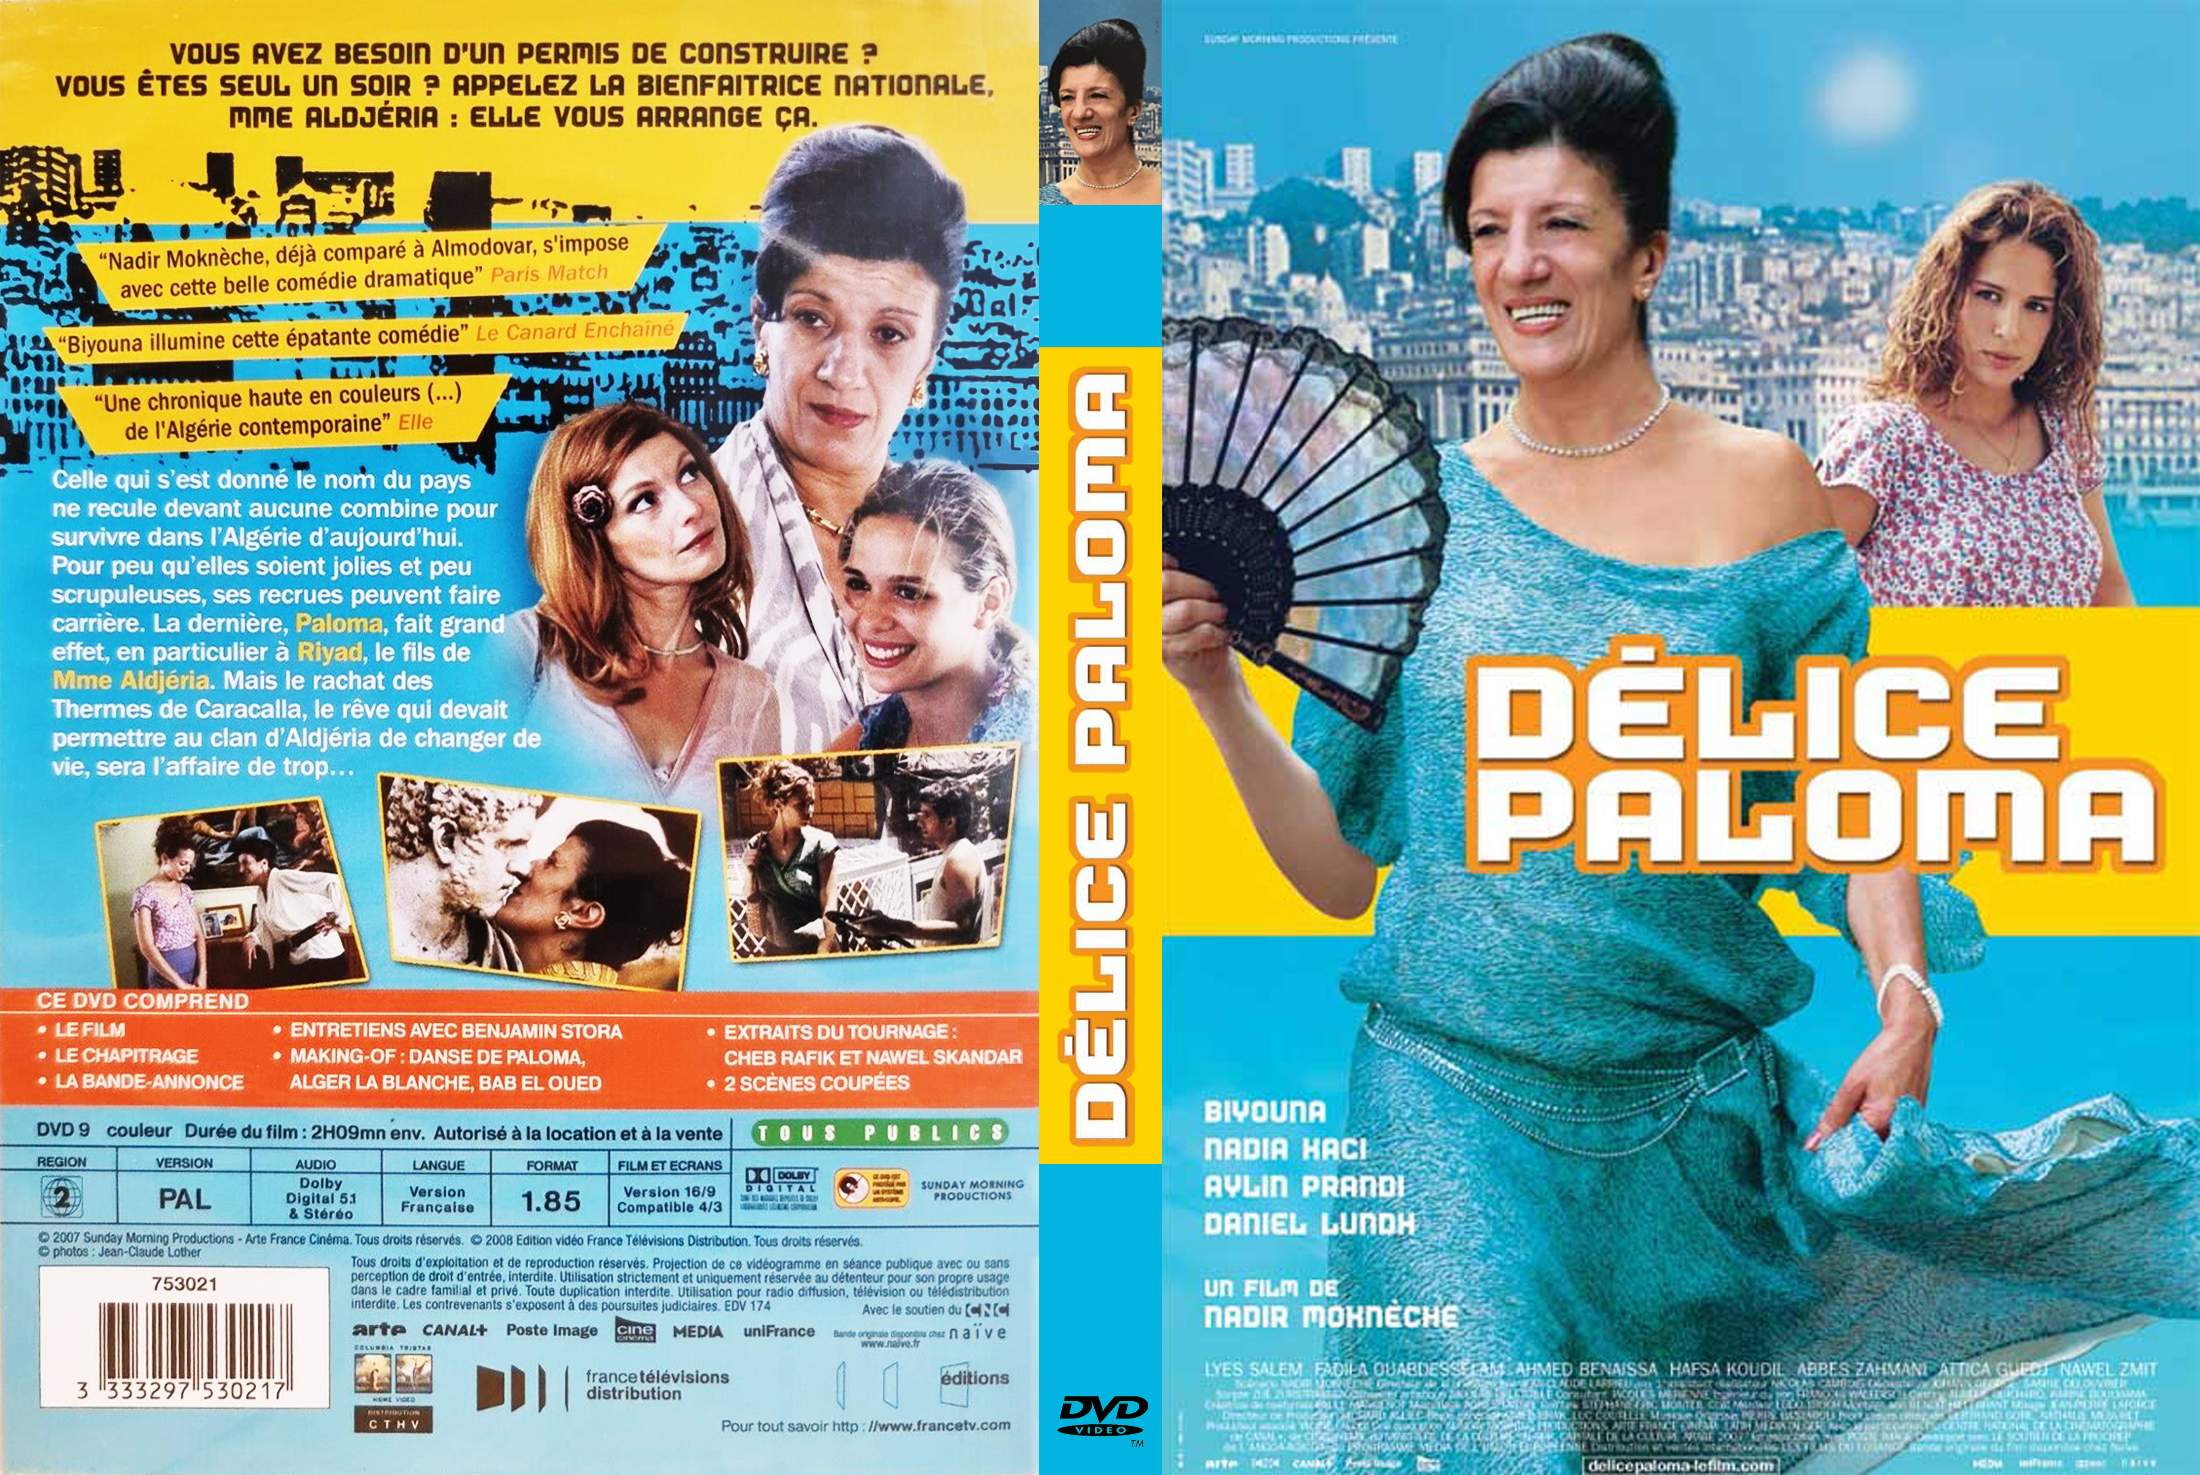 Jaquette DVD Delice paloma